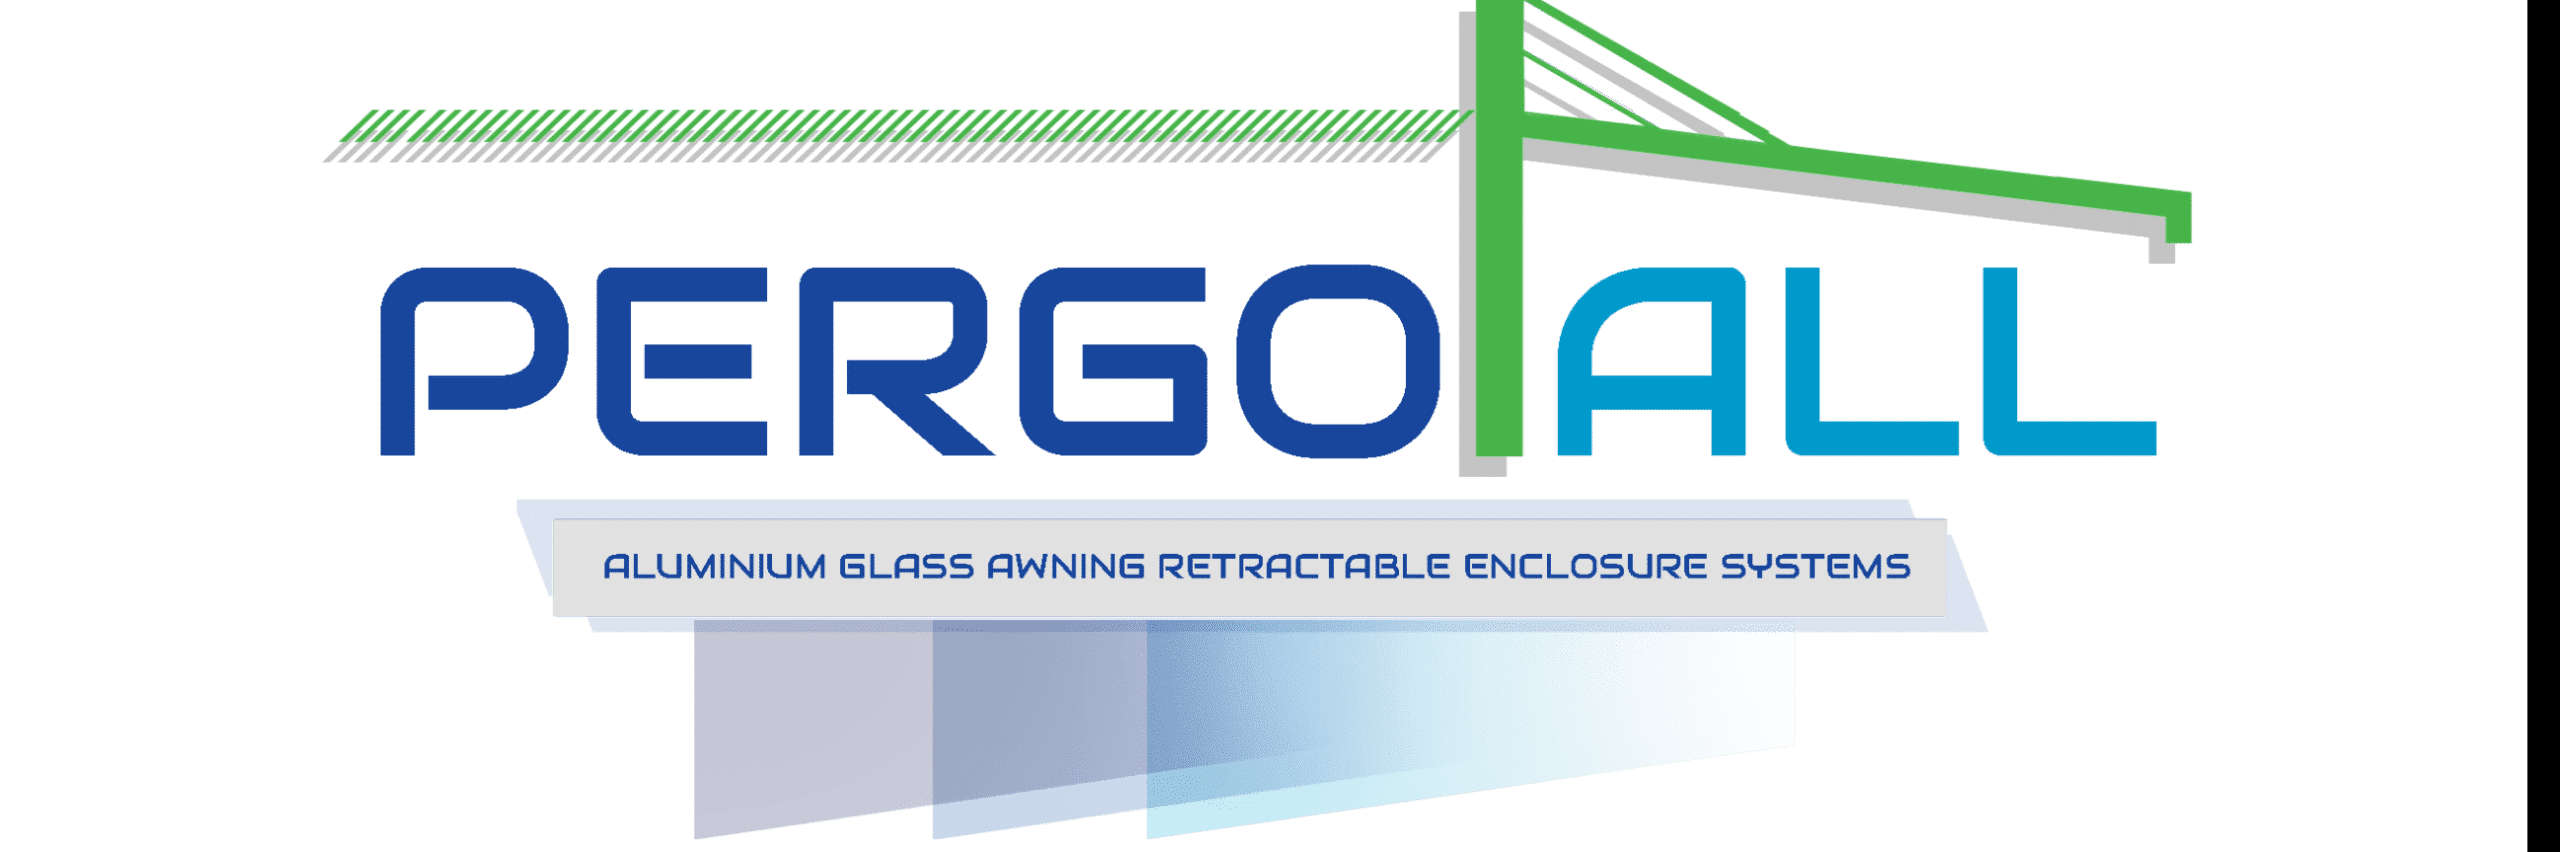 Pergoall Pergola & Awning and Aluminum Glass Systems